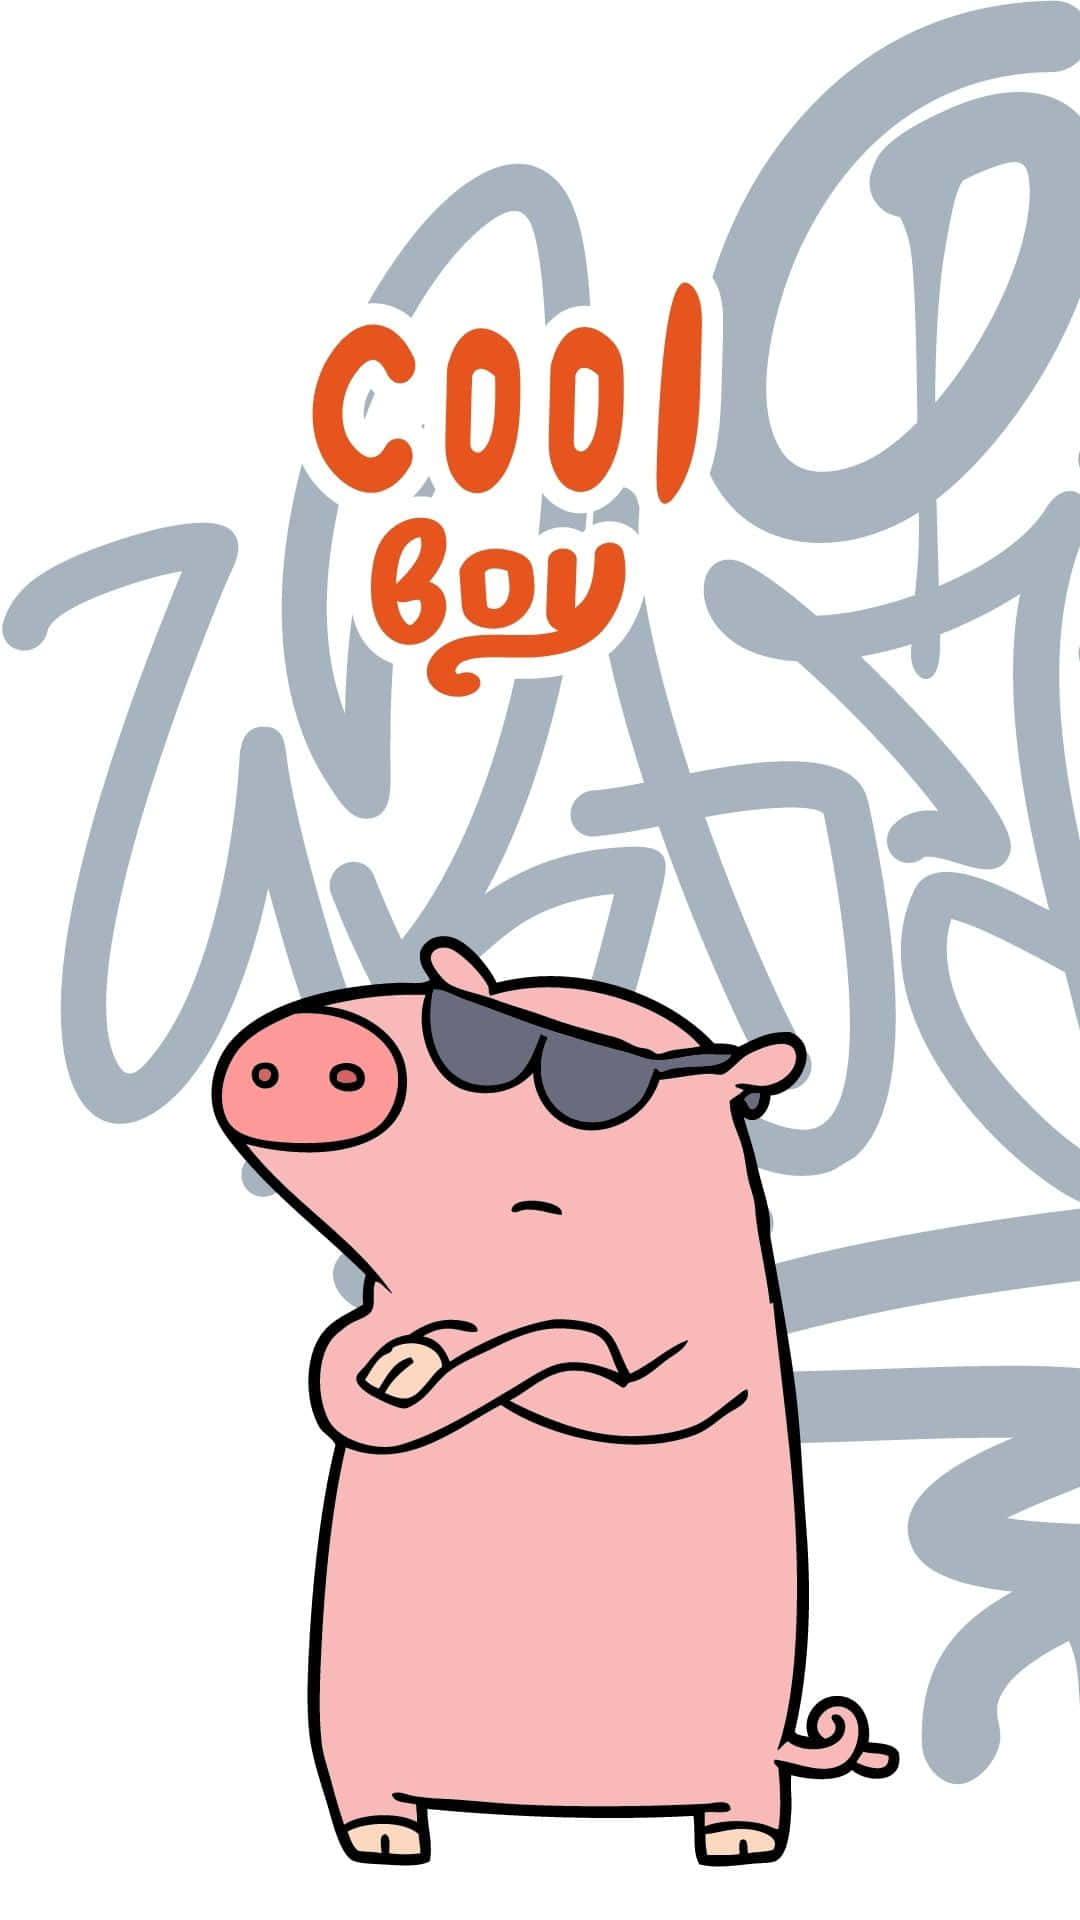 A Cartoon Pig With Sunglasses And Graffiti